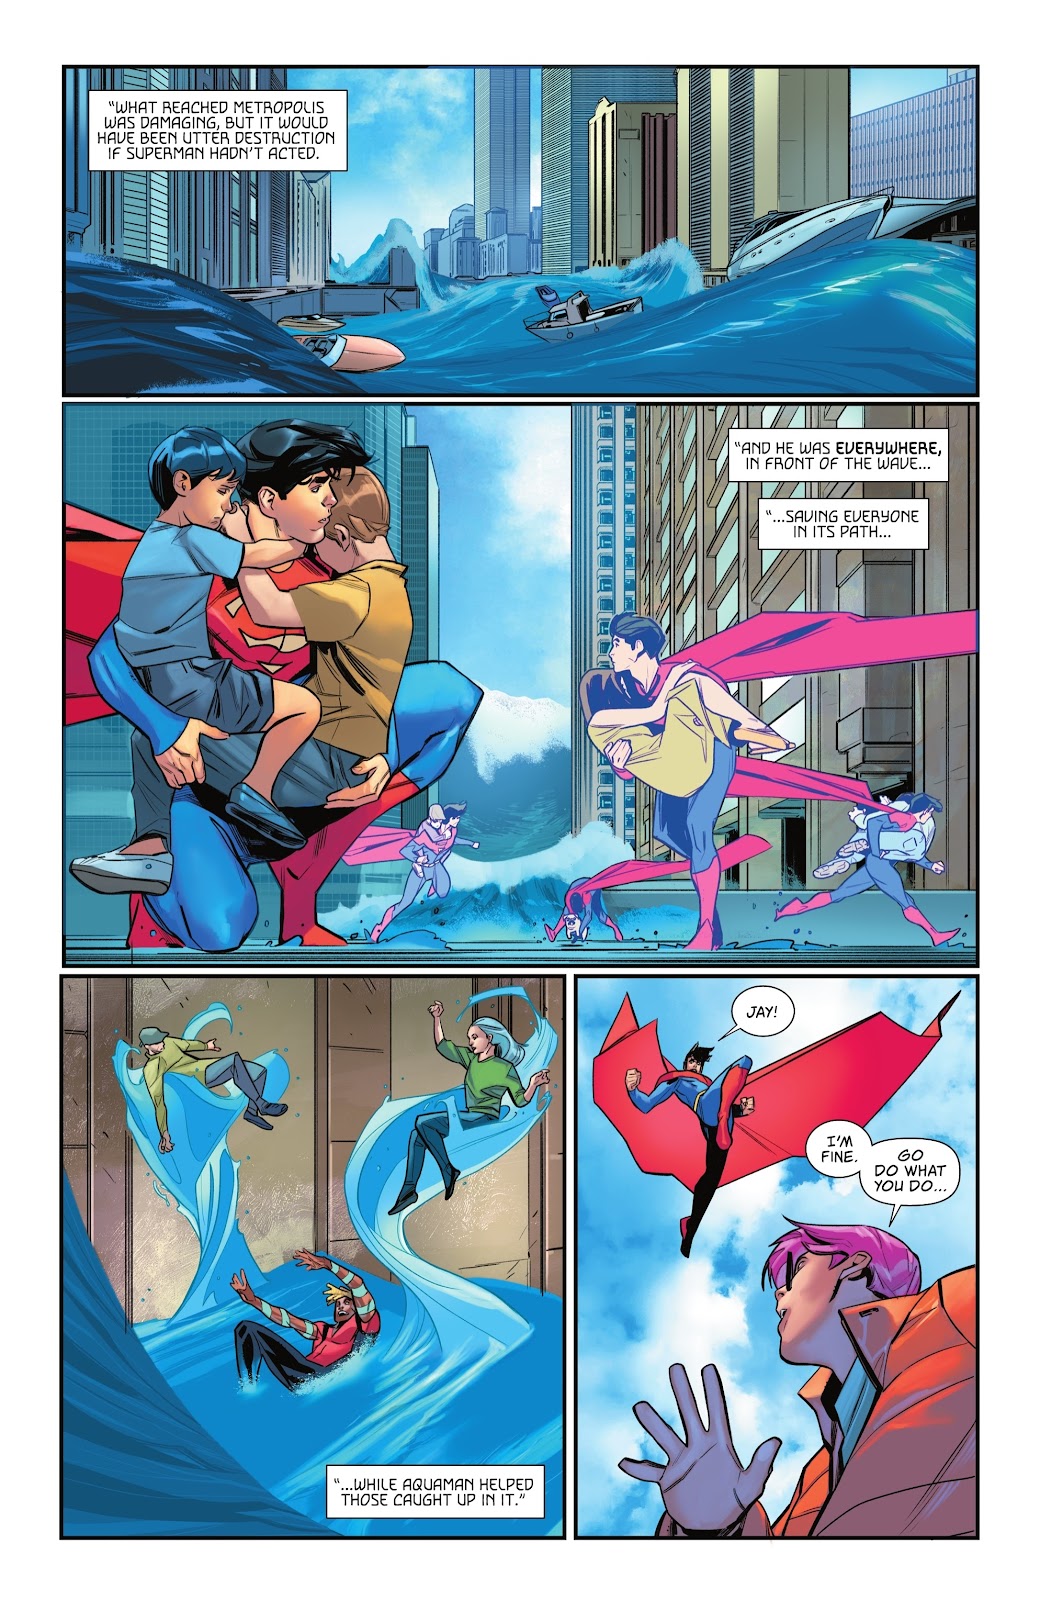 How Superman Stopped A Tsunami